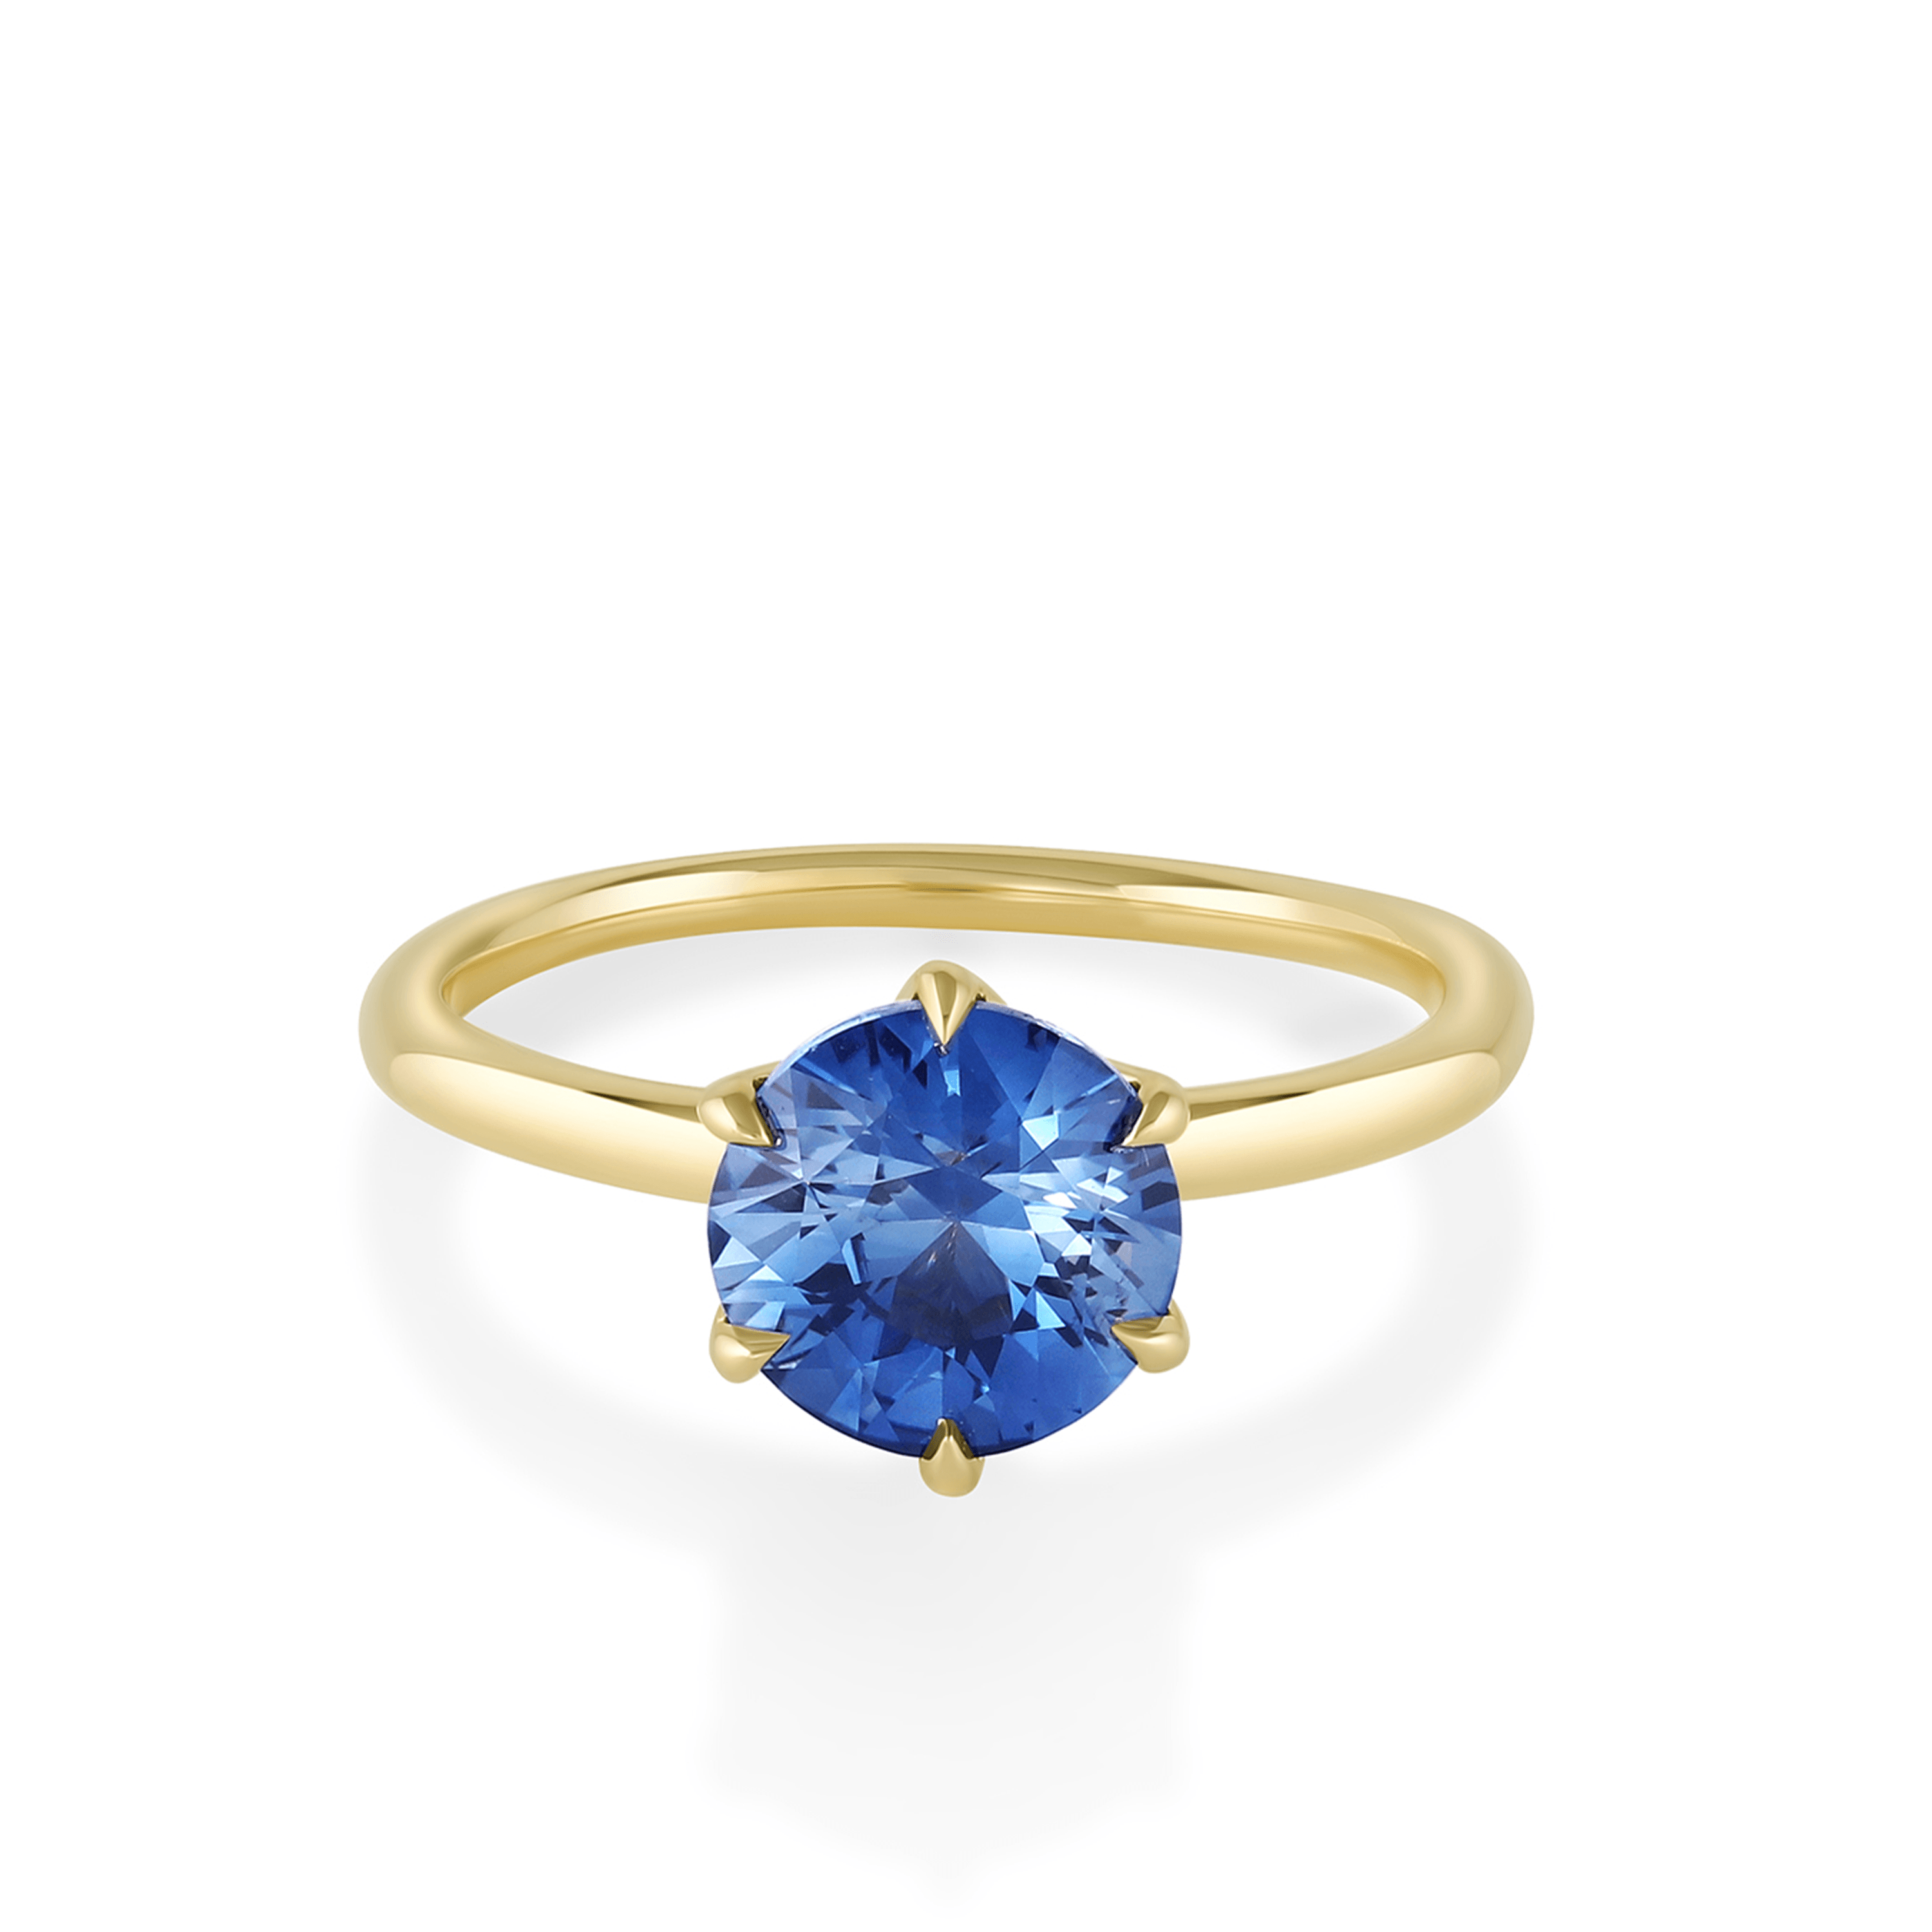 Blue Sapphire Ring - Emerald Cut 1.79 Ct. - 14K White Gold